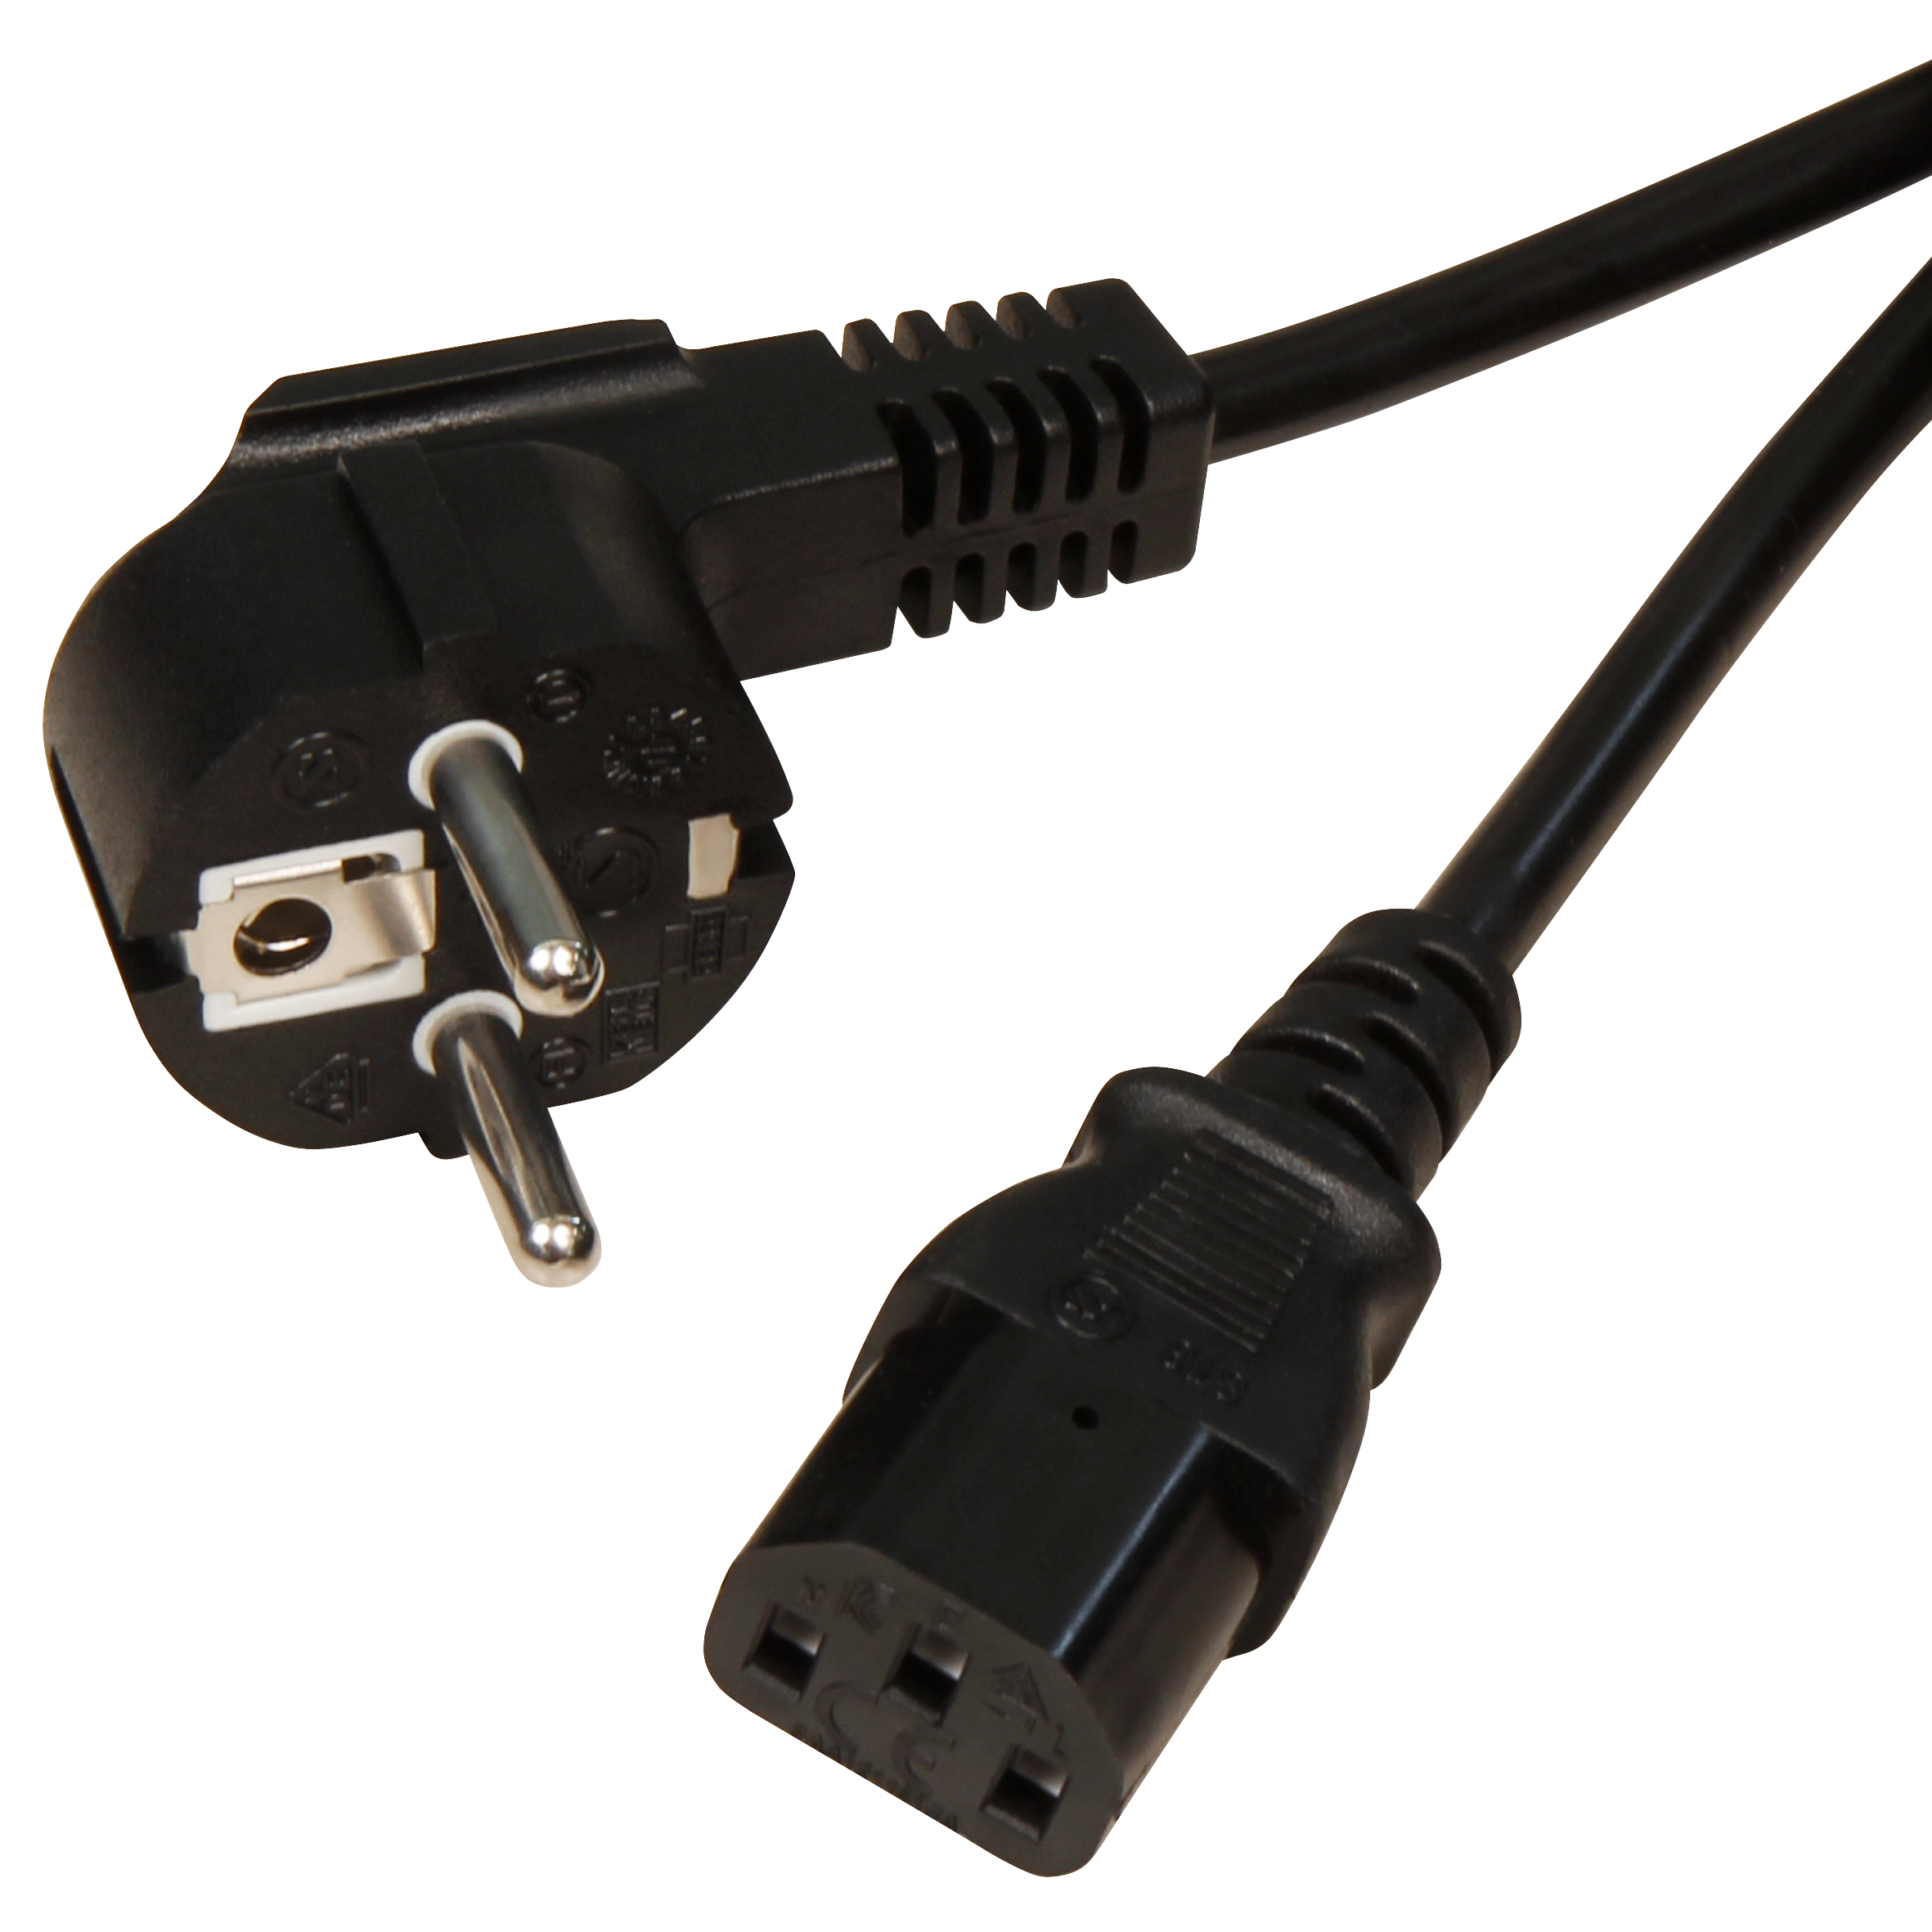 Kaltgeräte Anschlusskabel McPower, H05VV-F3G 1,00mm², 5m, 10A/250V, schwarz